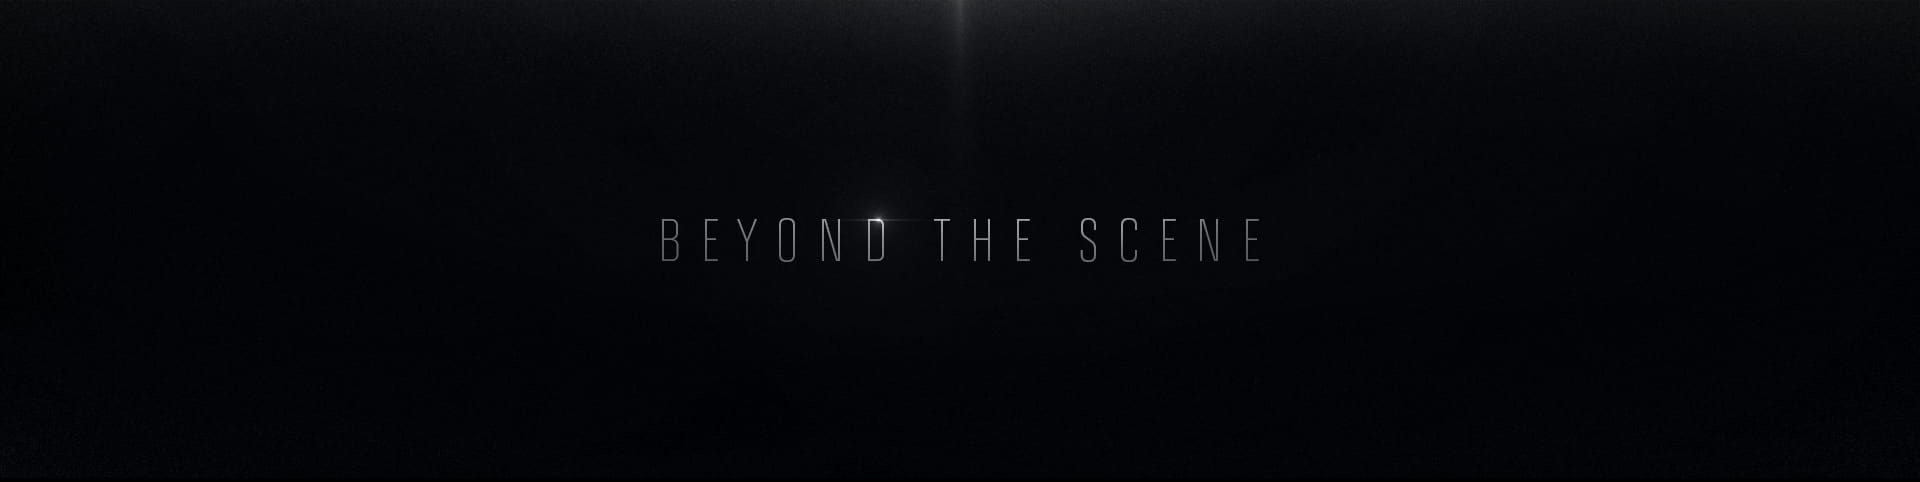 Beyond the Scene Image